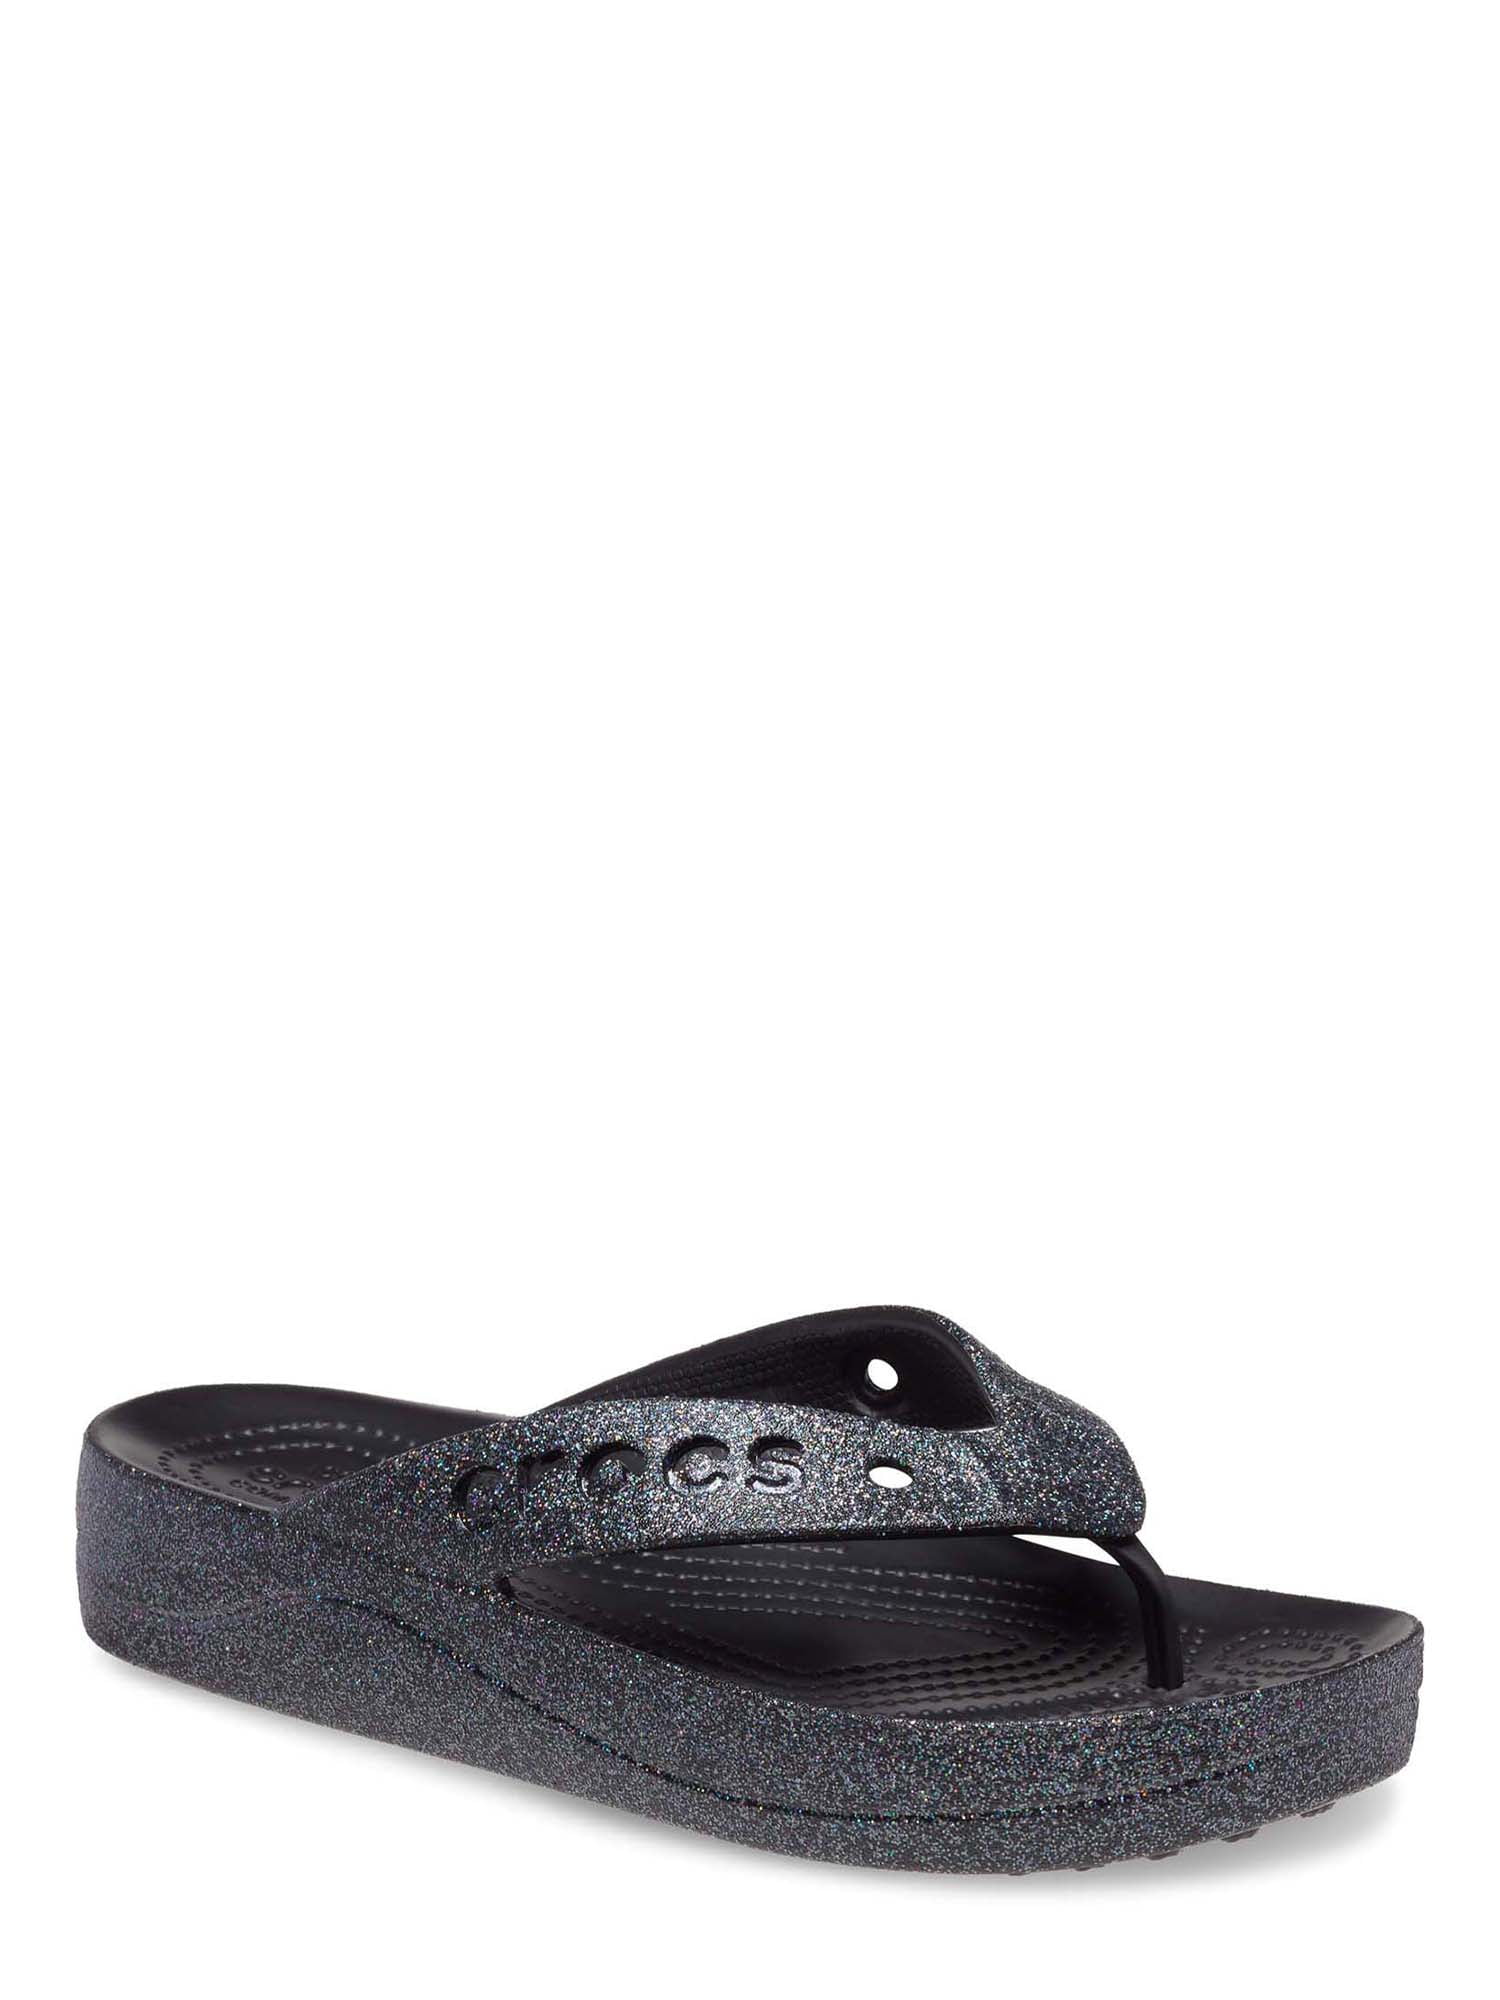 Crocs Women's Baya Platform Glitter Flip Sandal